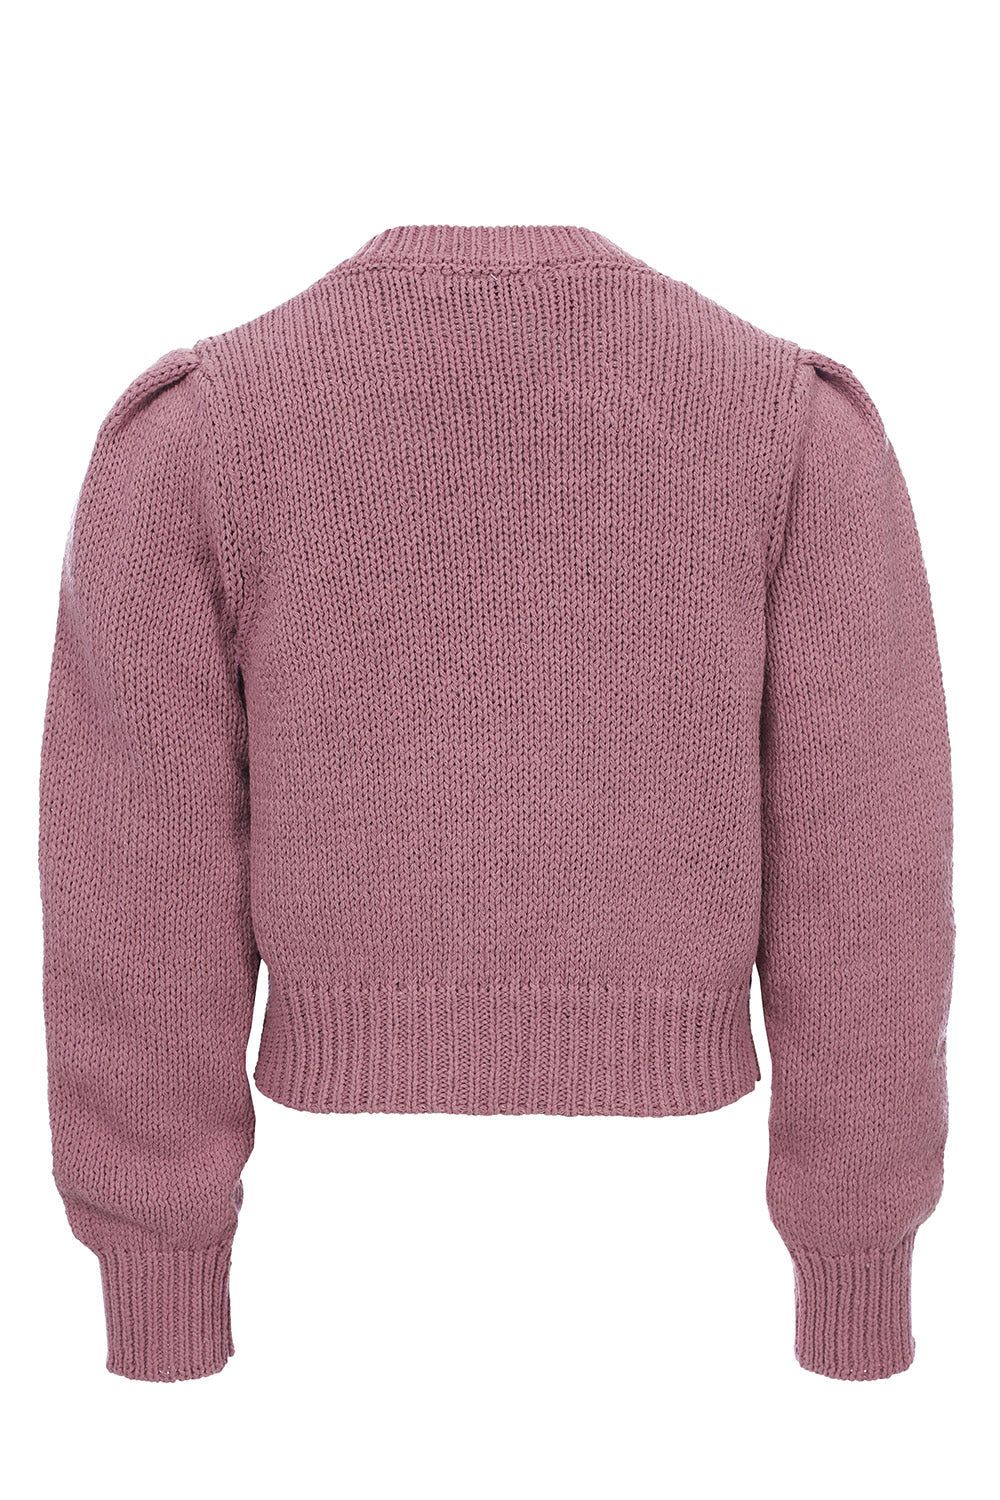 Meisjes Knitted Pullover van LOOXS Little in de kleur Mauve Blush in maat 128.